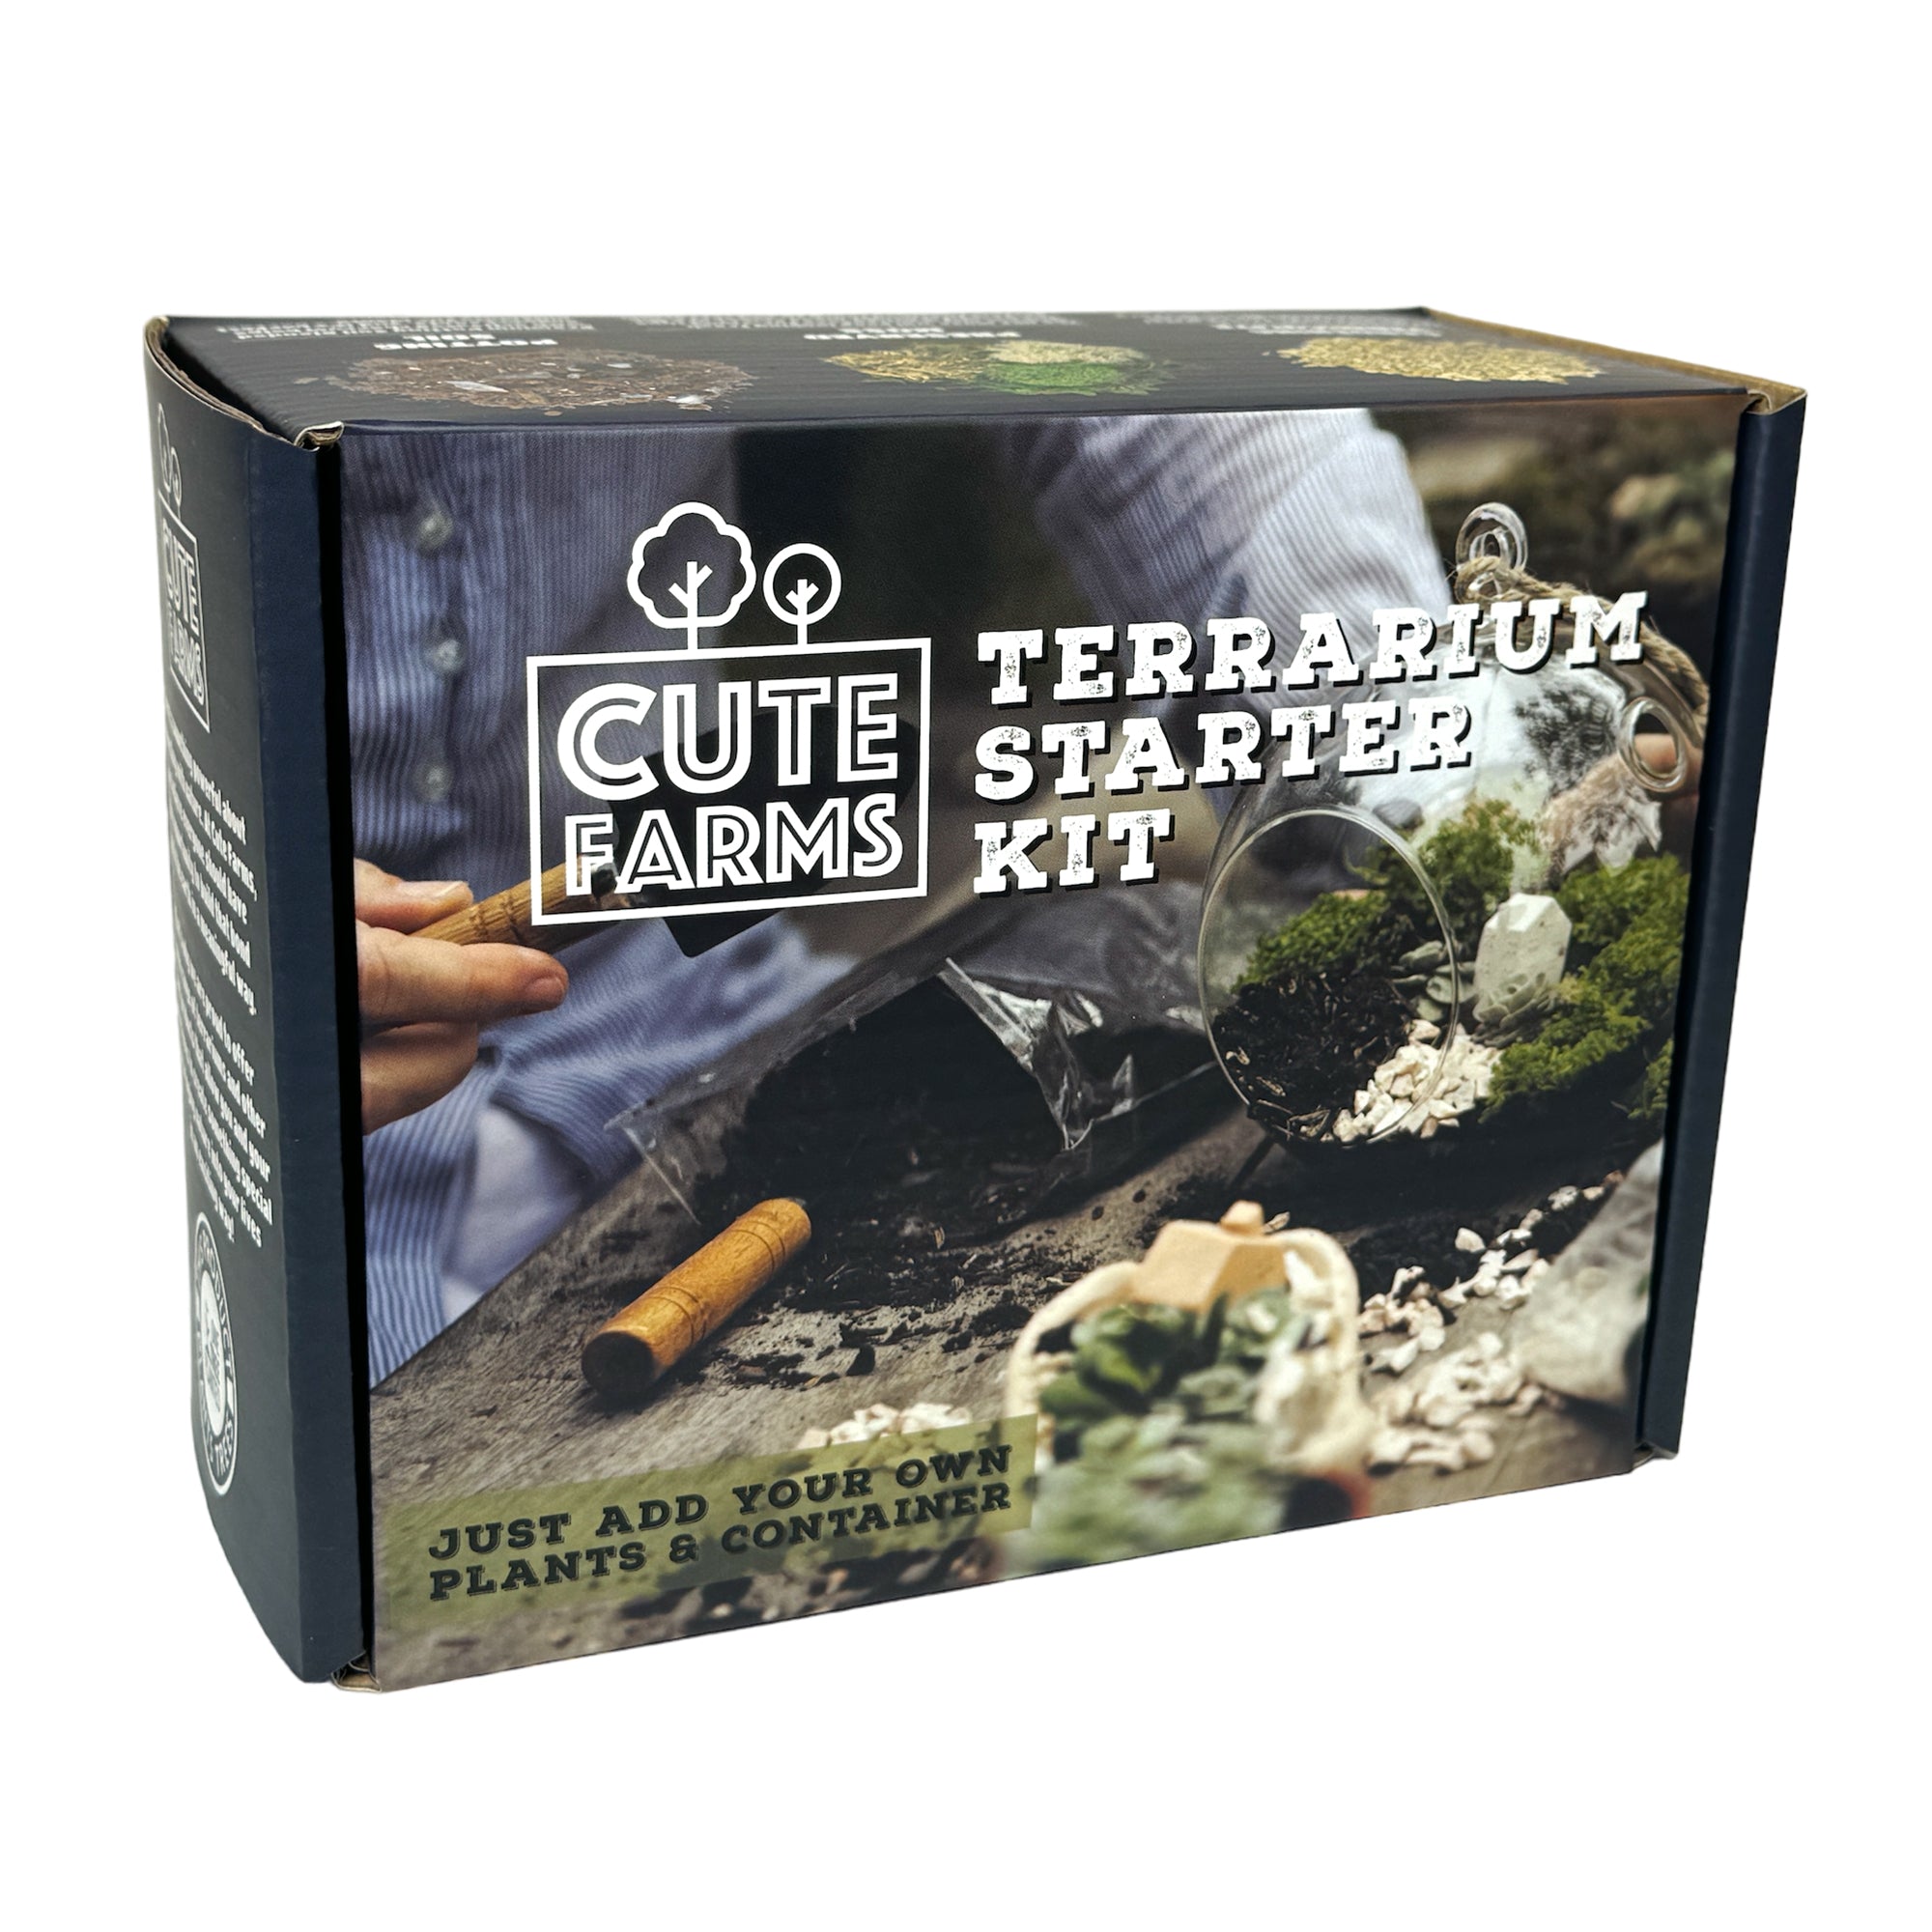 Cute Farms Terrarium Starter Kit with Tools